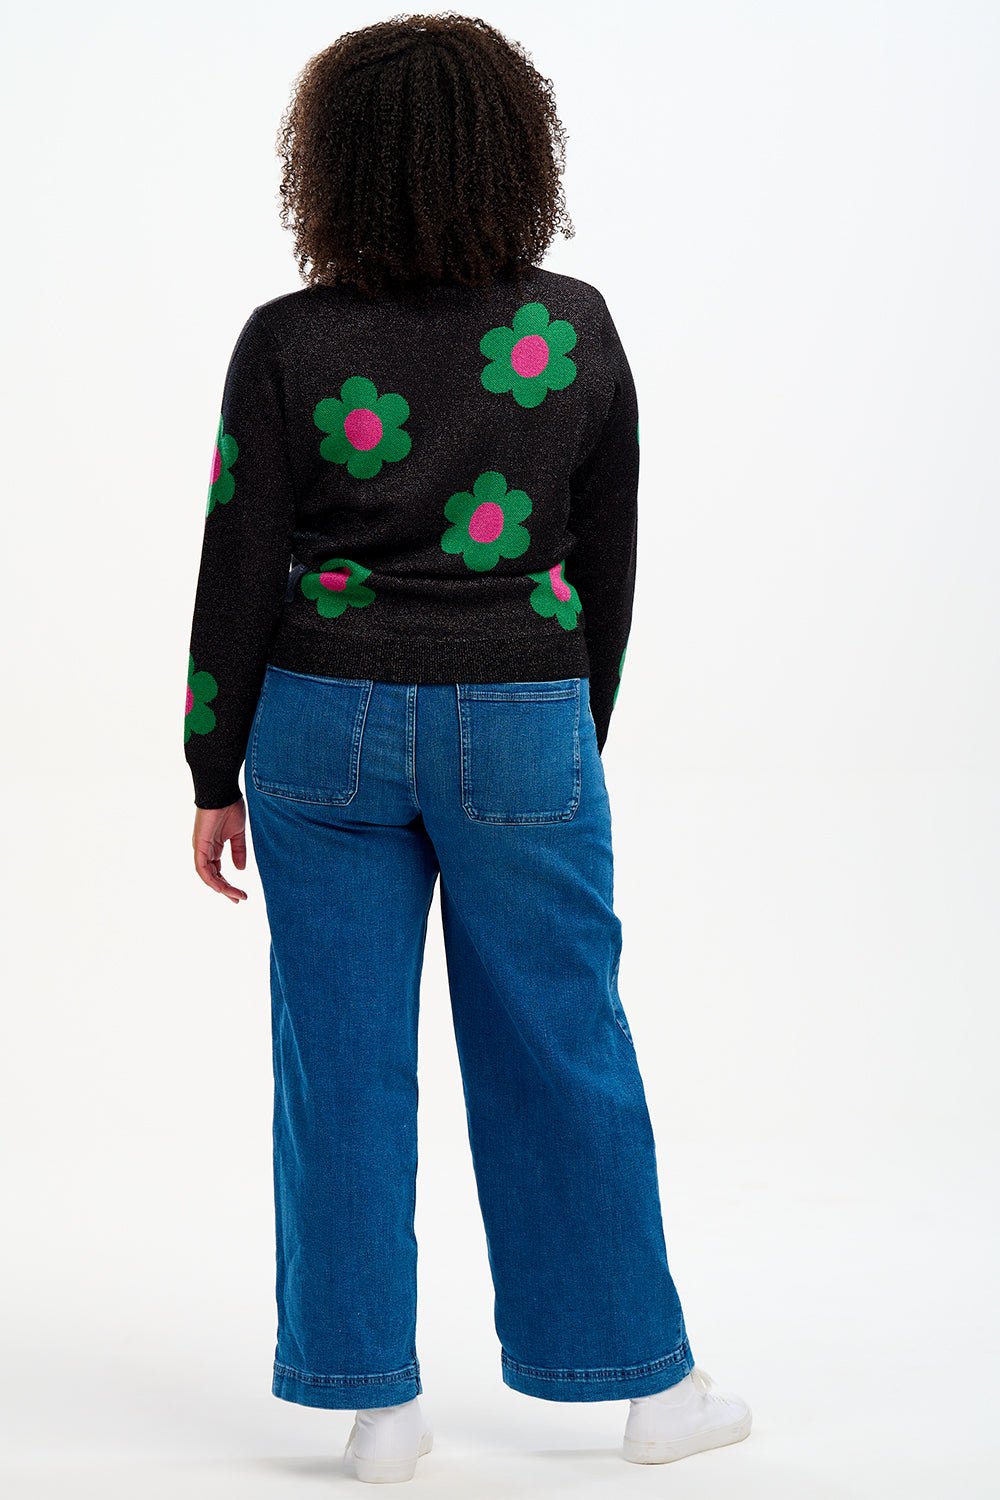 Rowena Jumper - Black, Sparkle Flowers - Rockamilly-Knitwear-Vintage